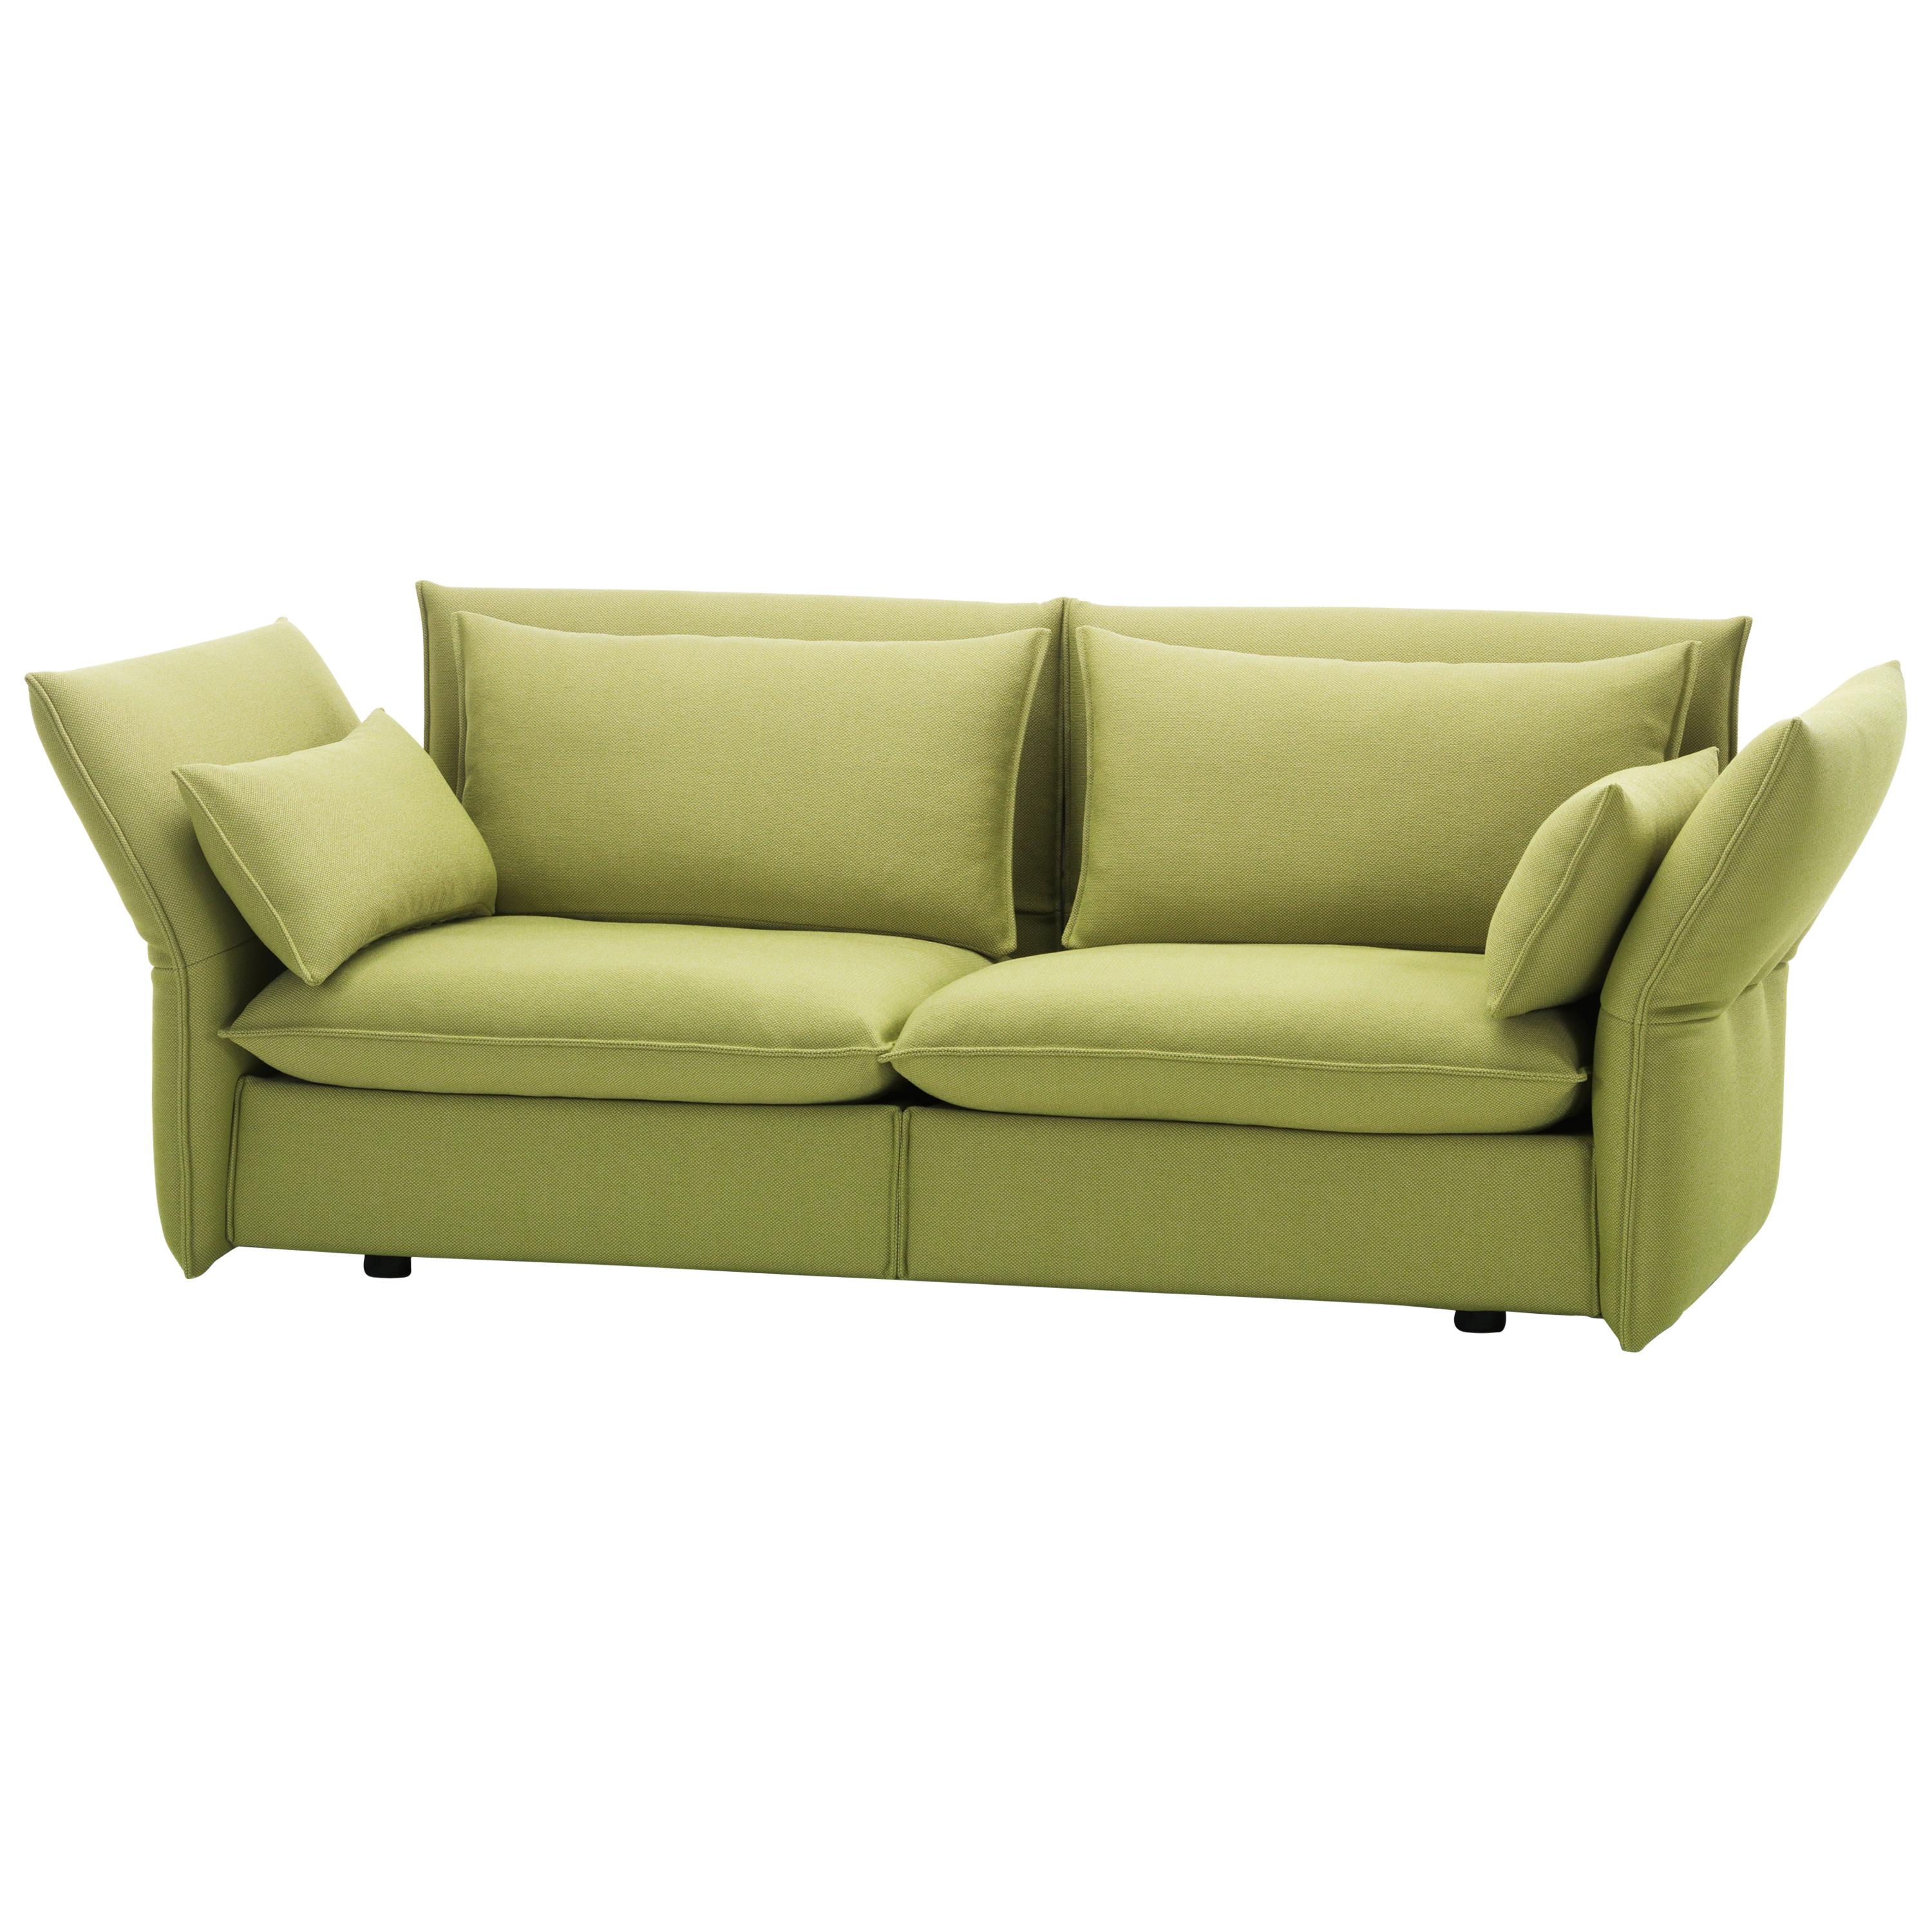 Vitra Mariposa 2 1/2-Seat Sofa in Sand Avocado by Edward Barber & Jay Osgerby im Angebot